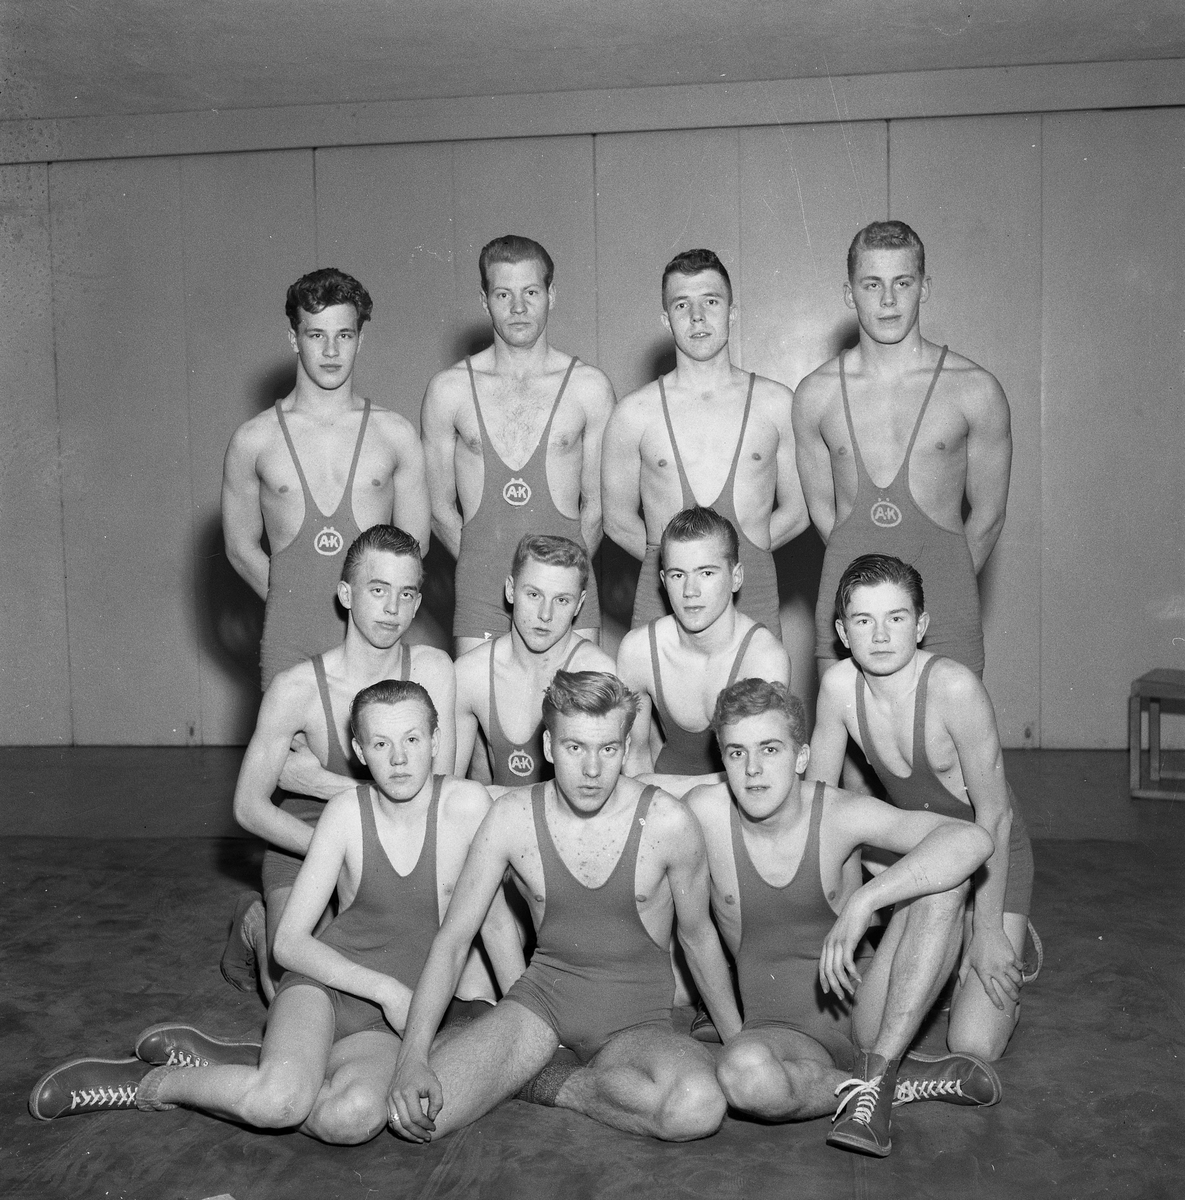 ÖAK, gruppbild.
December 1956.